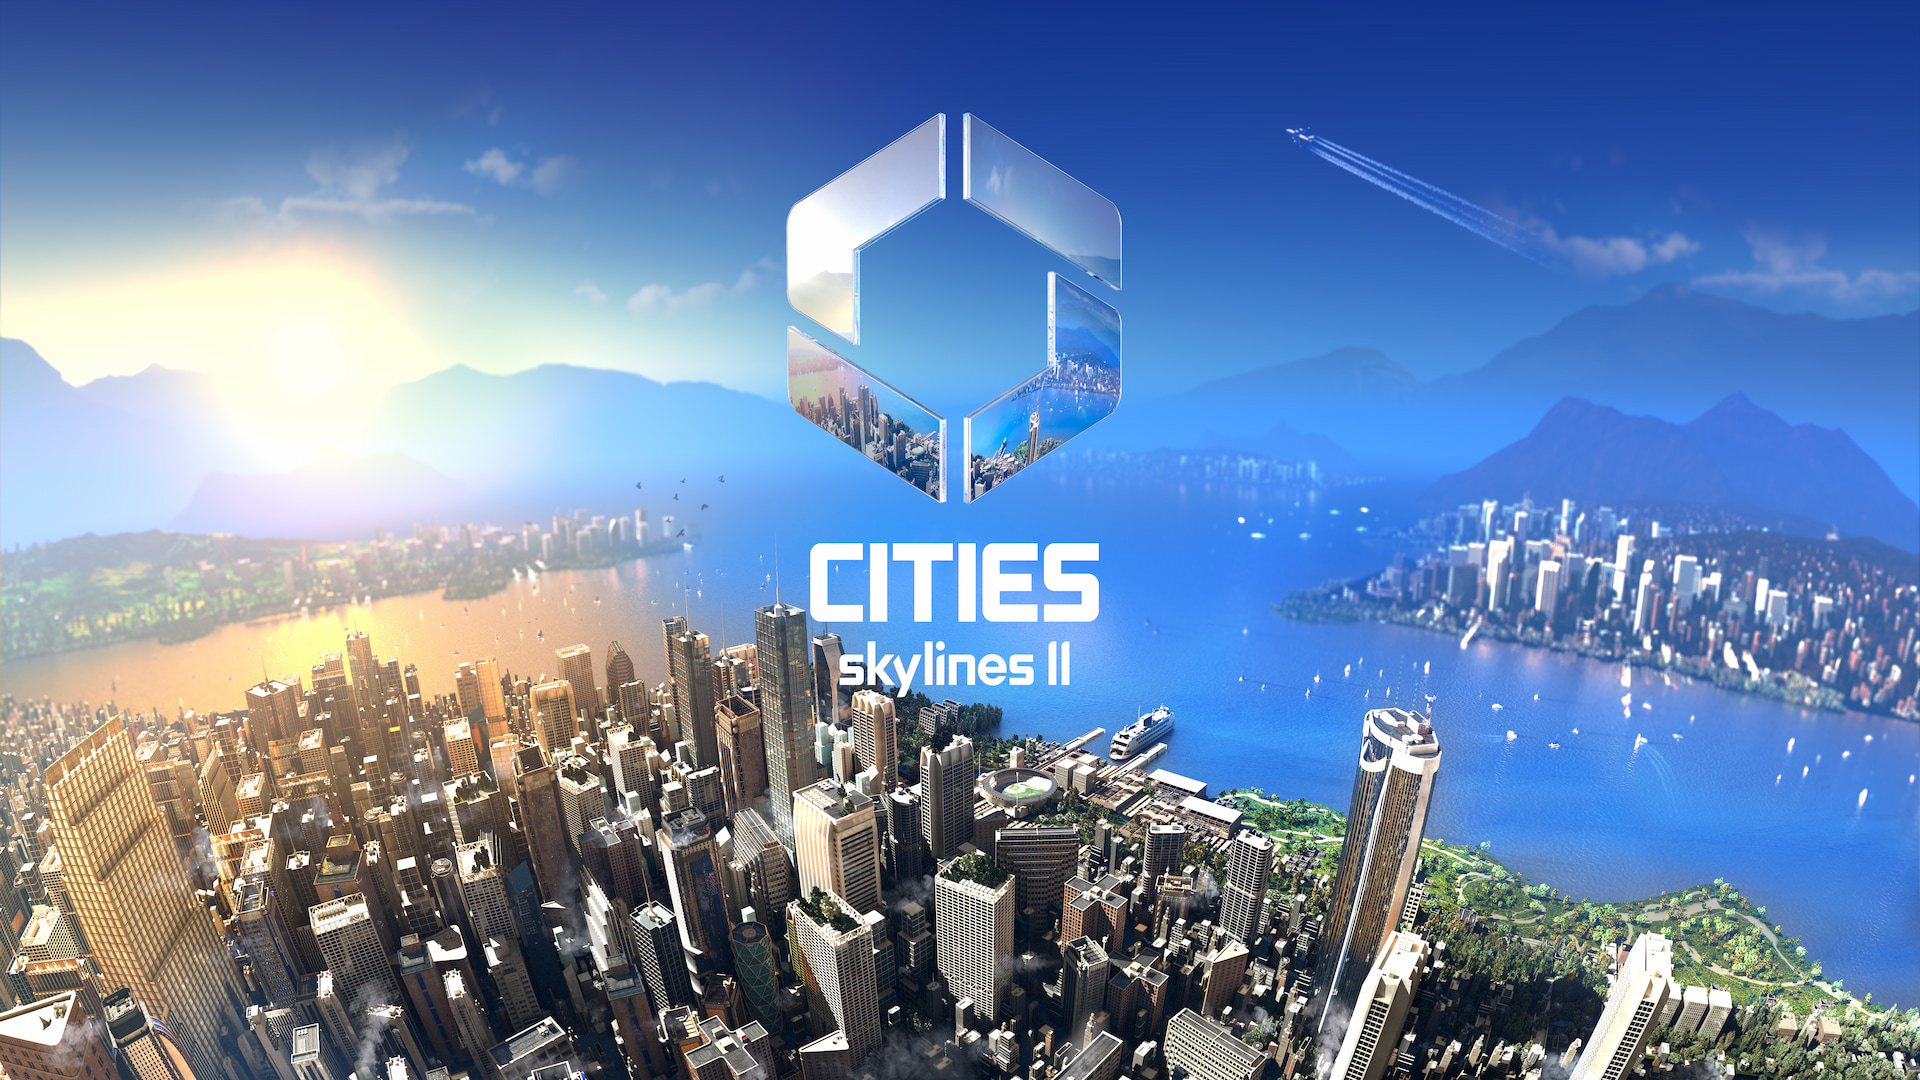 rs Life 2 announces major City Stories update